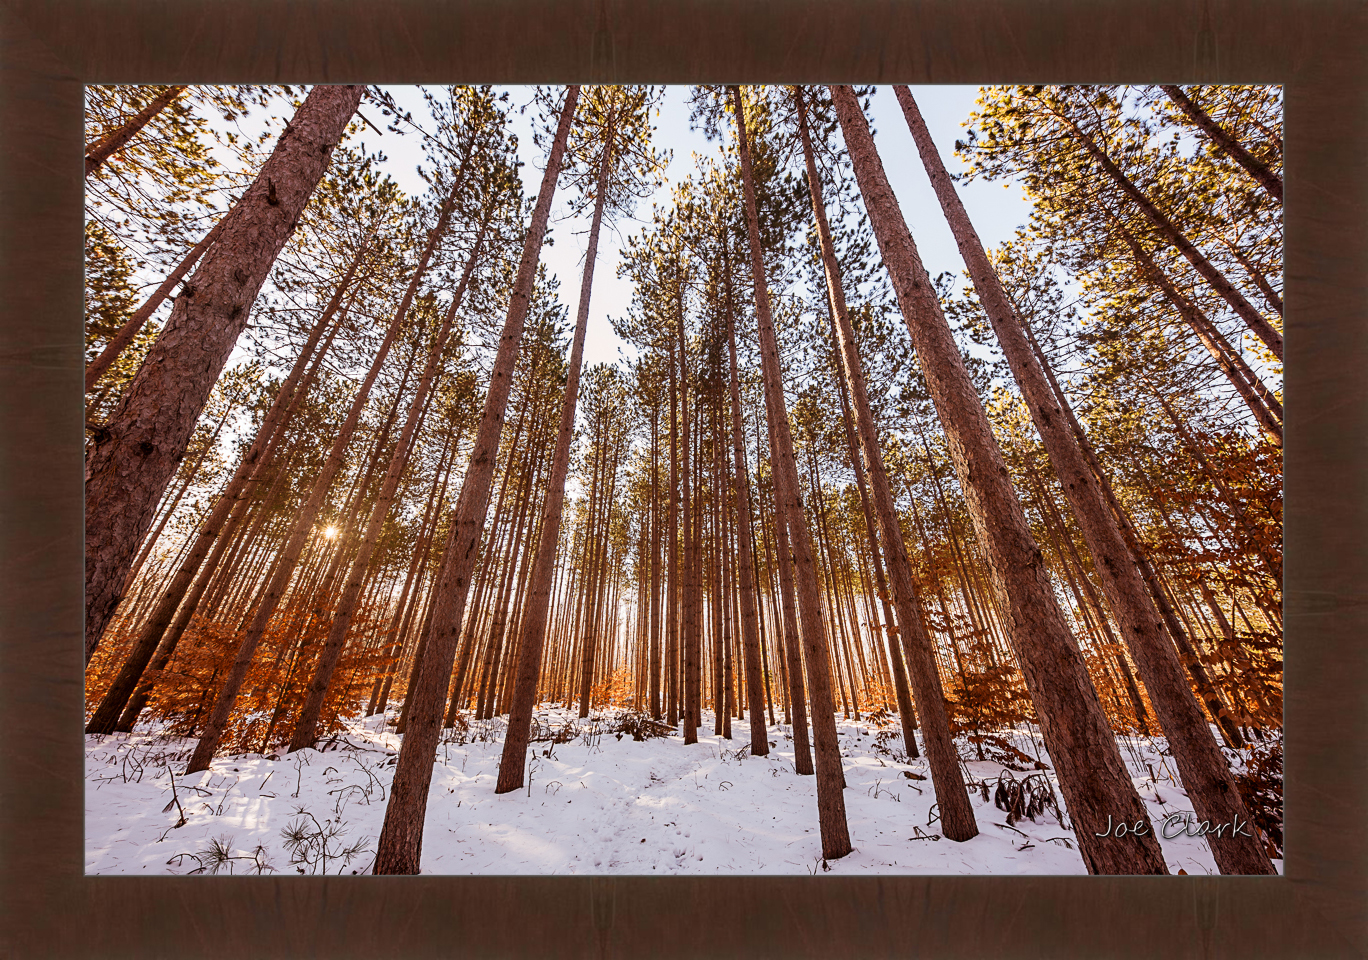 Pine Snow by Joe Clark R60587